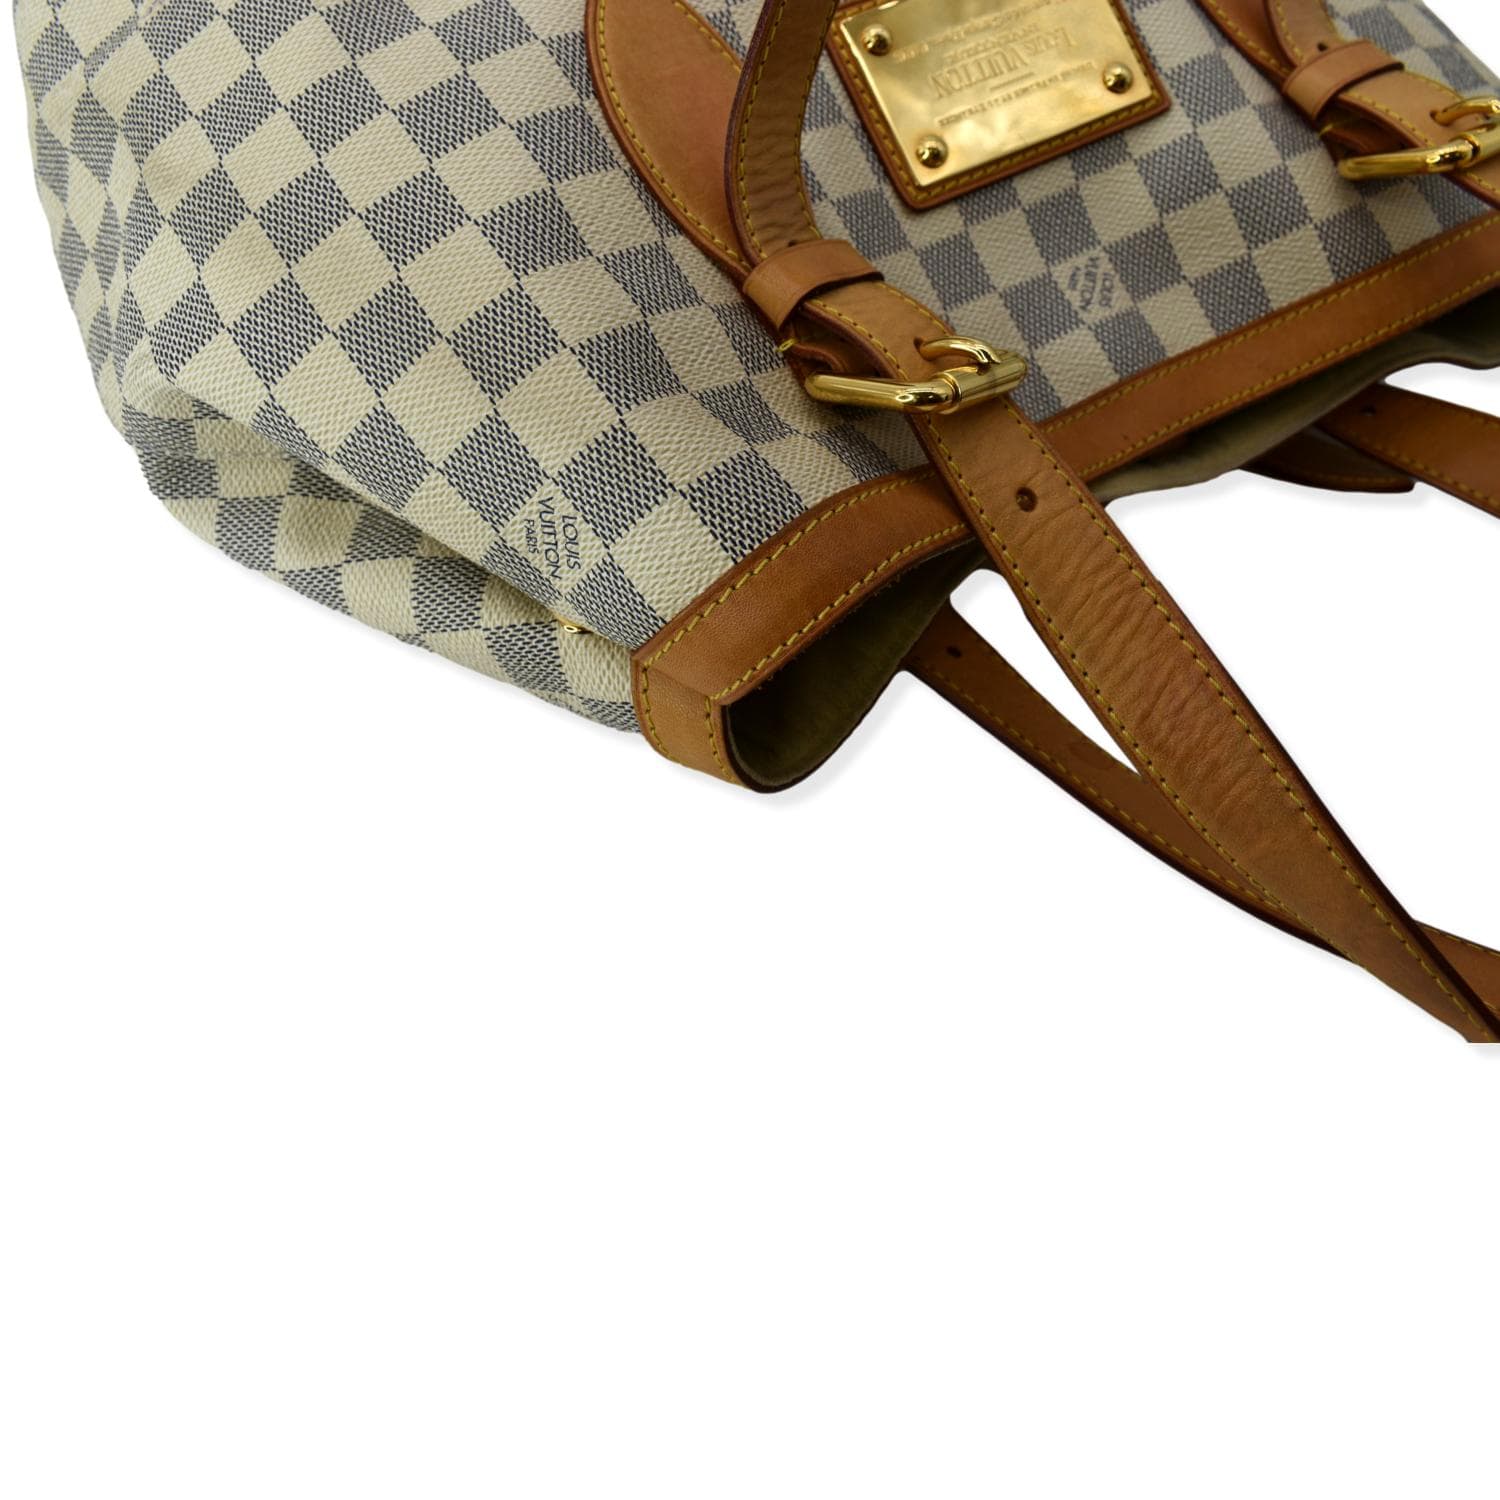 Louis Vuitton Hampstead Handbag Damier GM White